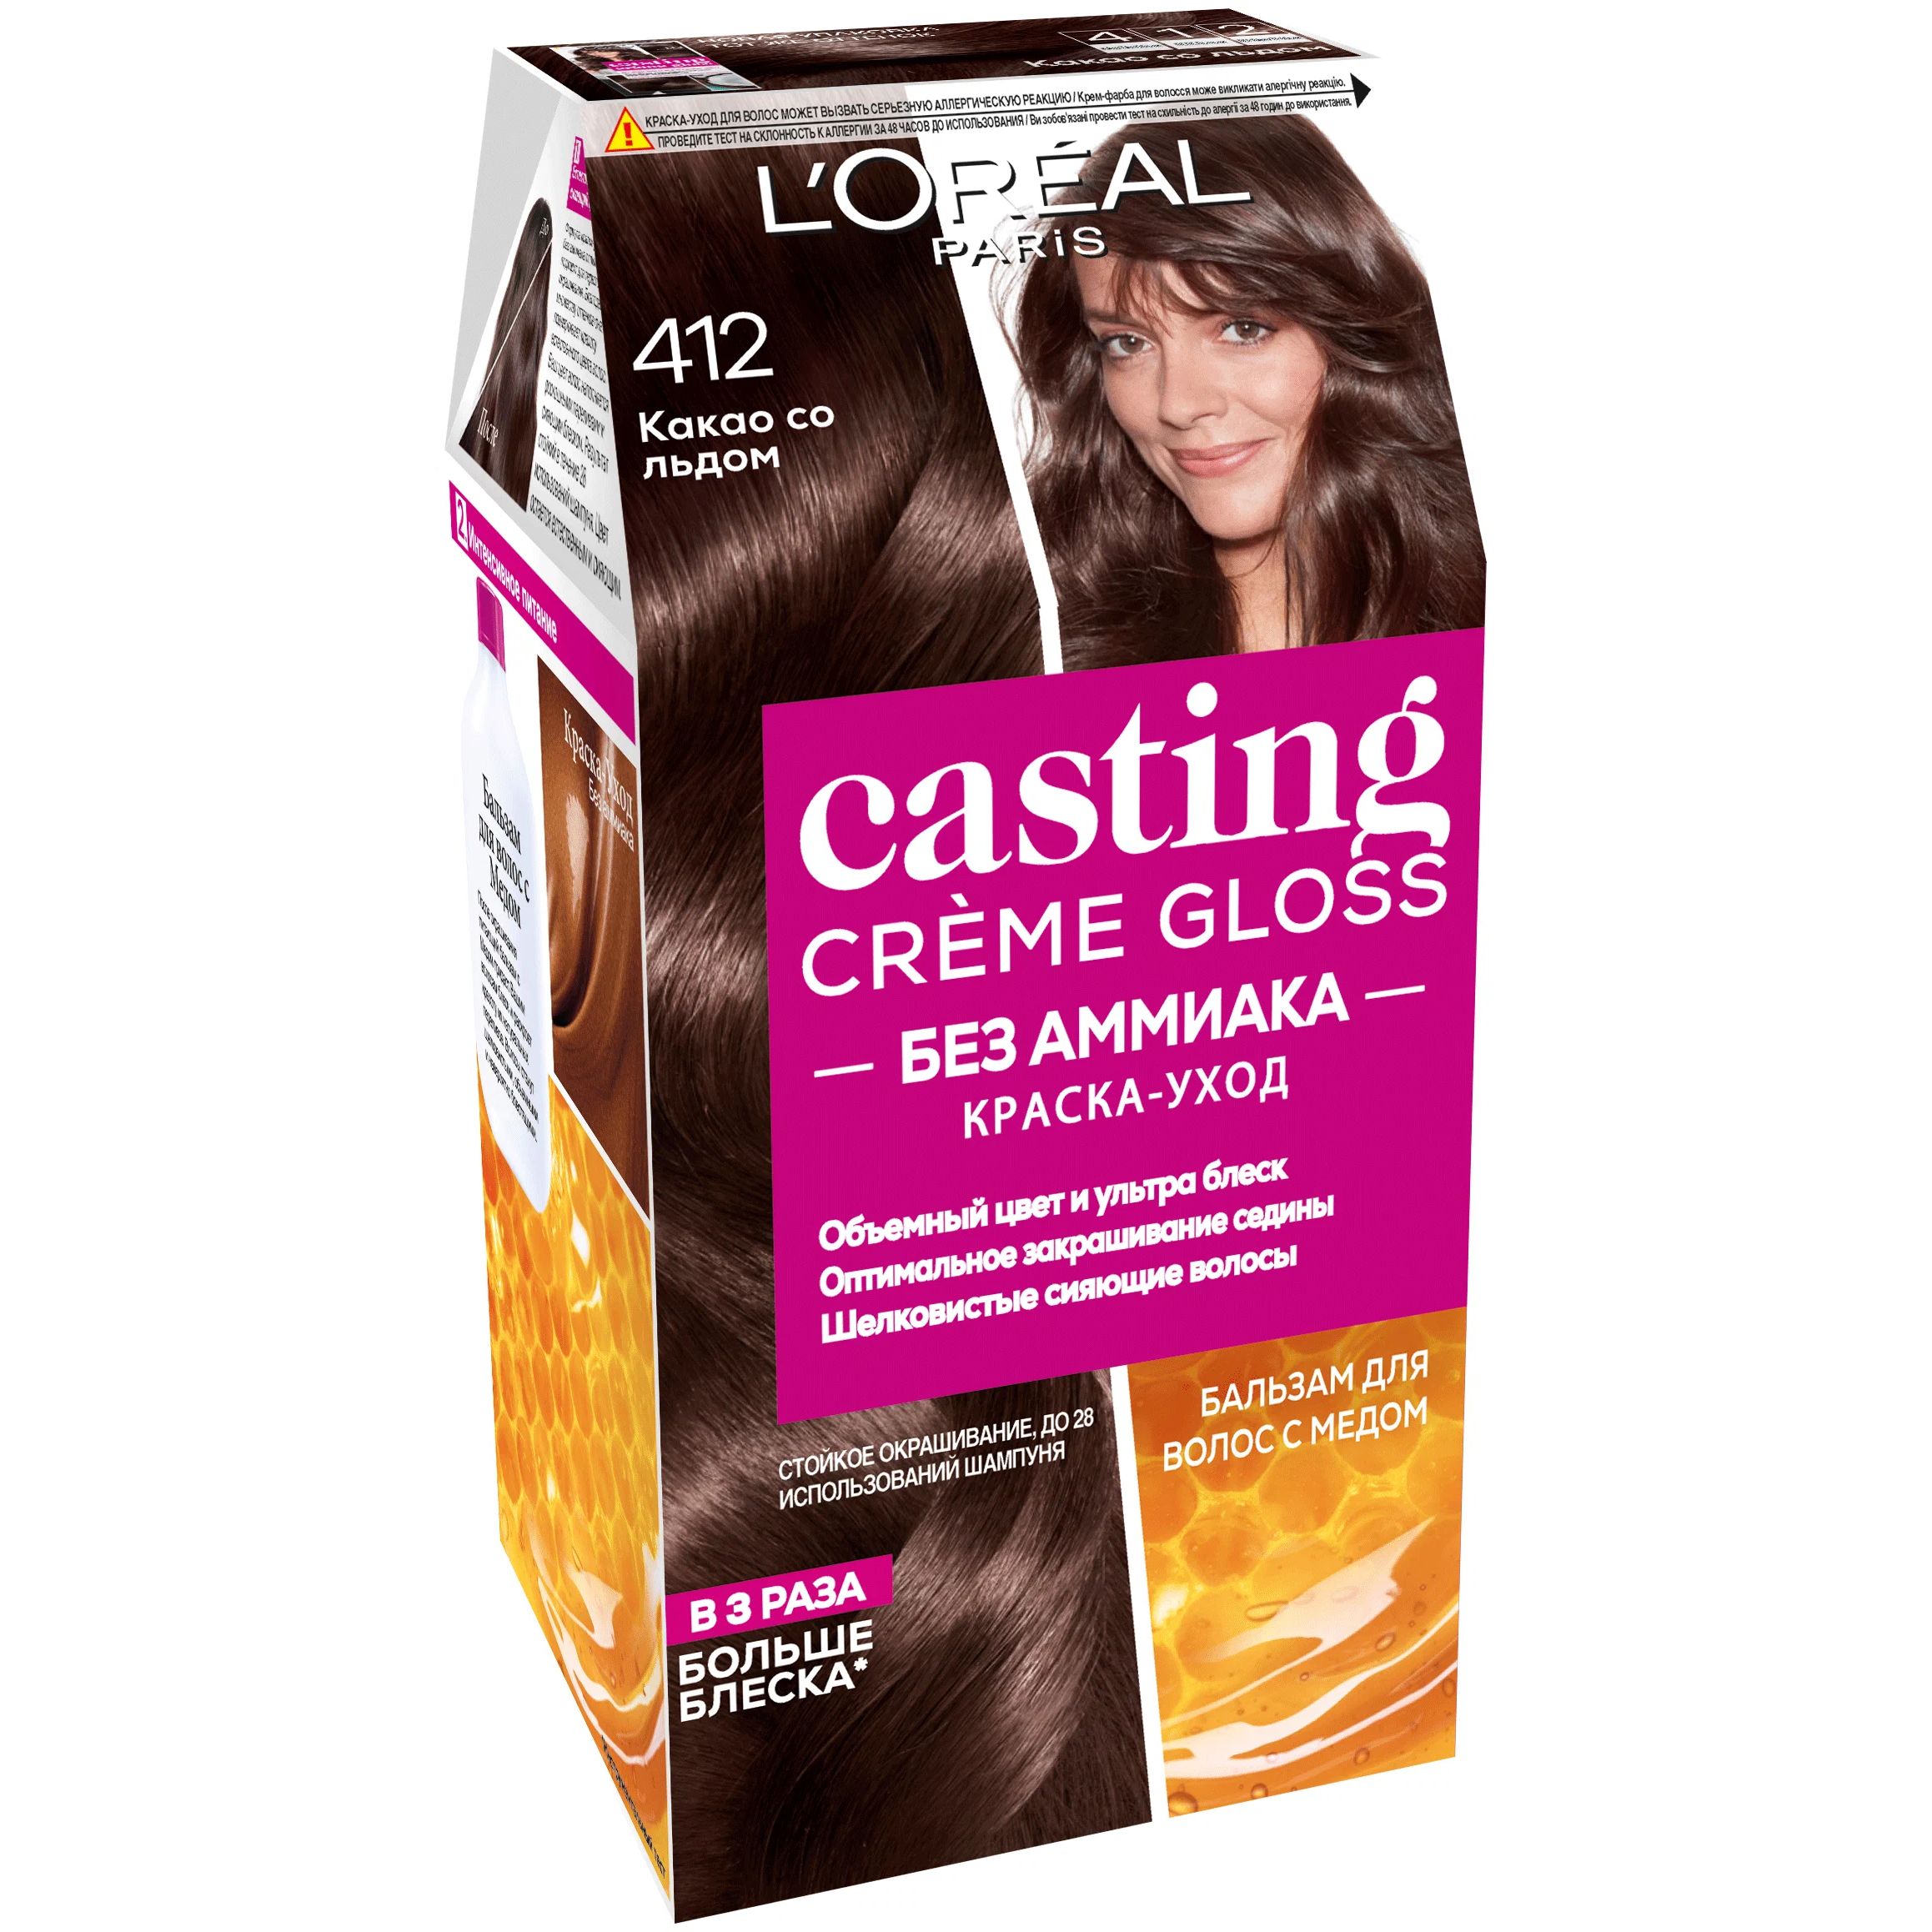 Краска-уход для волос L'Oreal Paris Casting Creme Gloss, 412 какао со льдом, , 180 мл краска для волос холодный мокко casting creme gloss loreal лореаль 254мл тон 5102